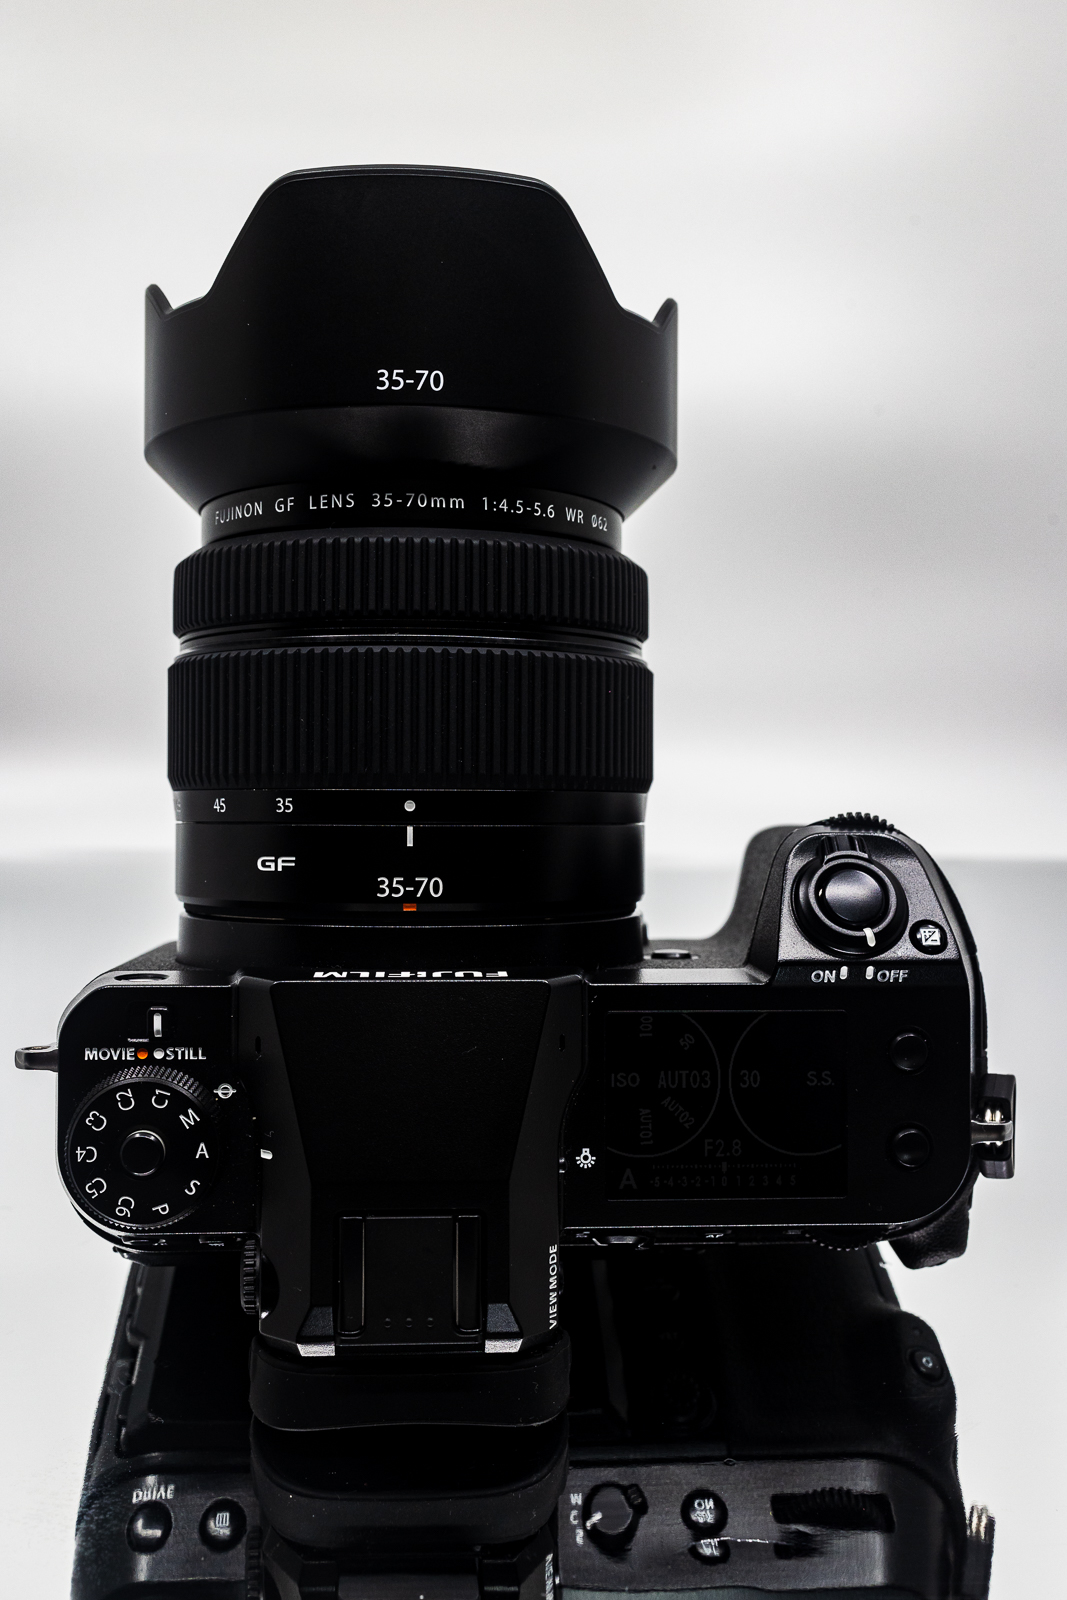 Evolution Apropos – The Fujifilm GFX50S II and GF35-70mm F4.5-5.6